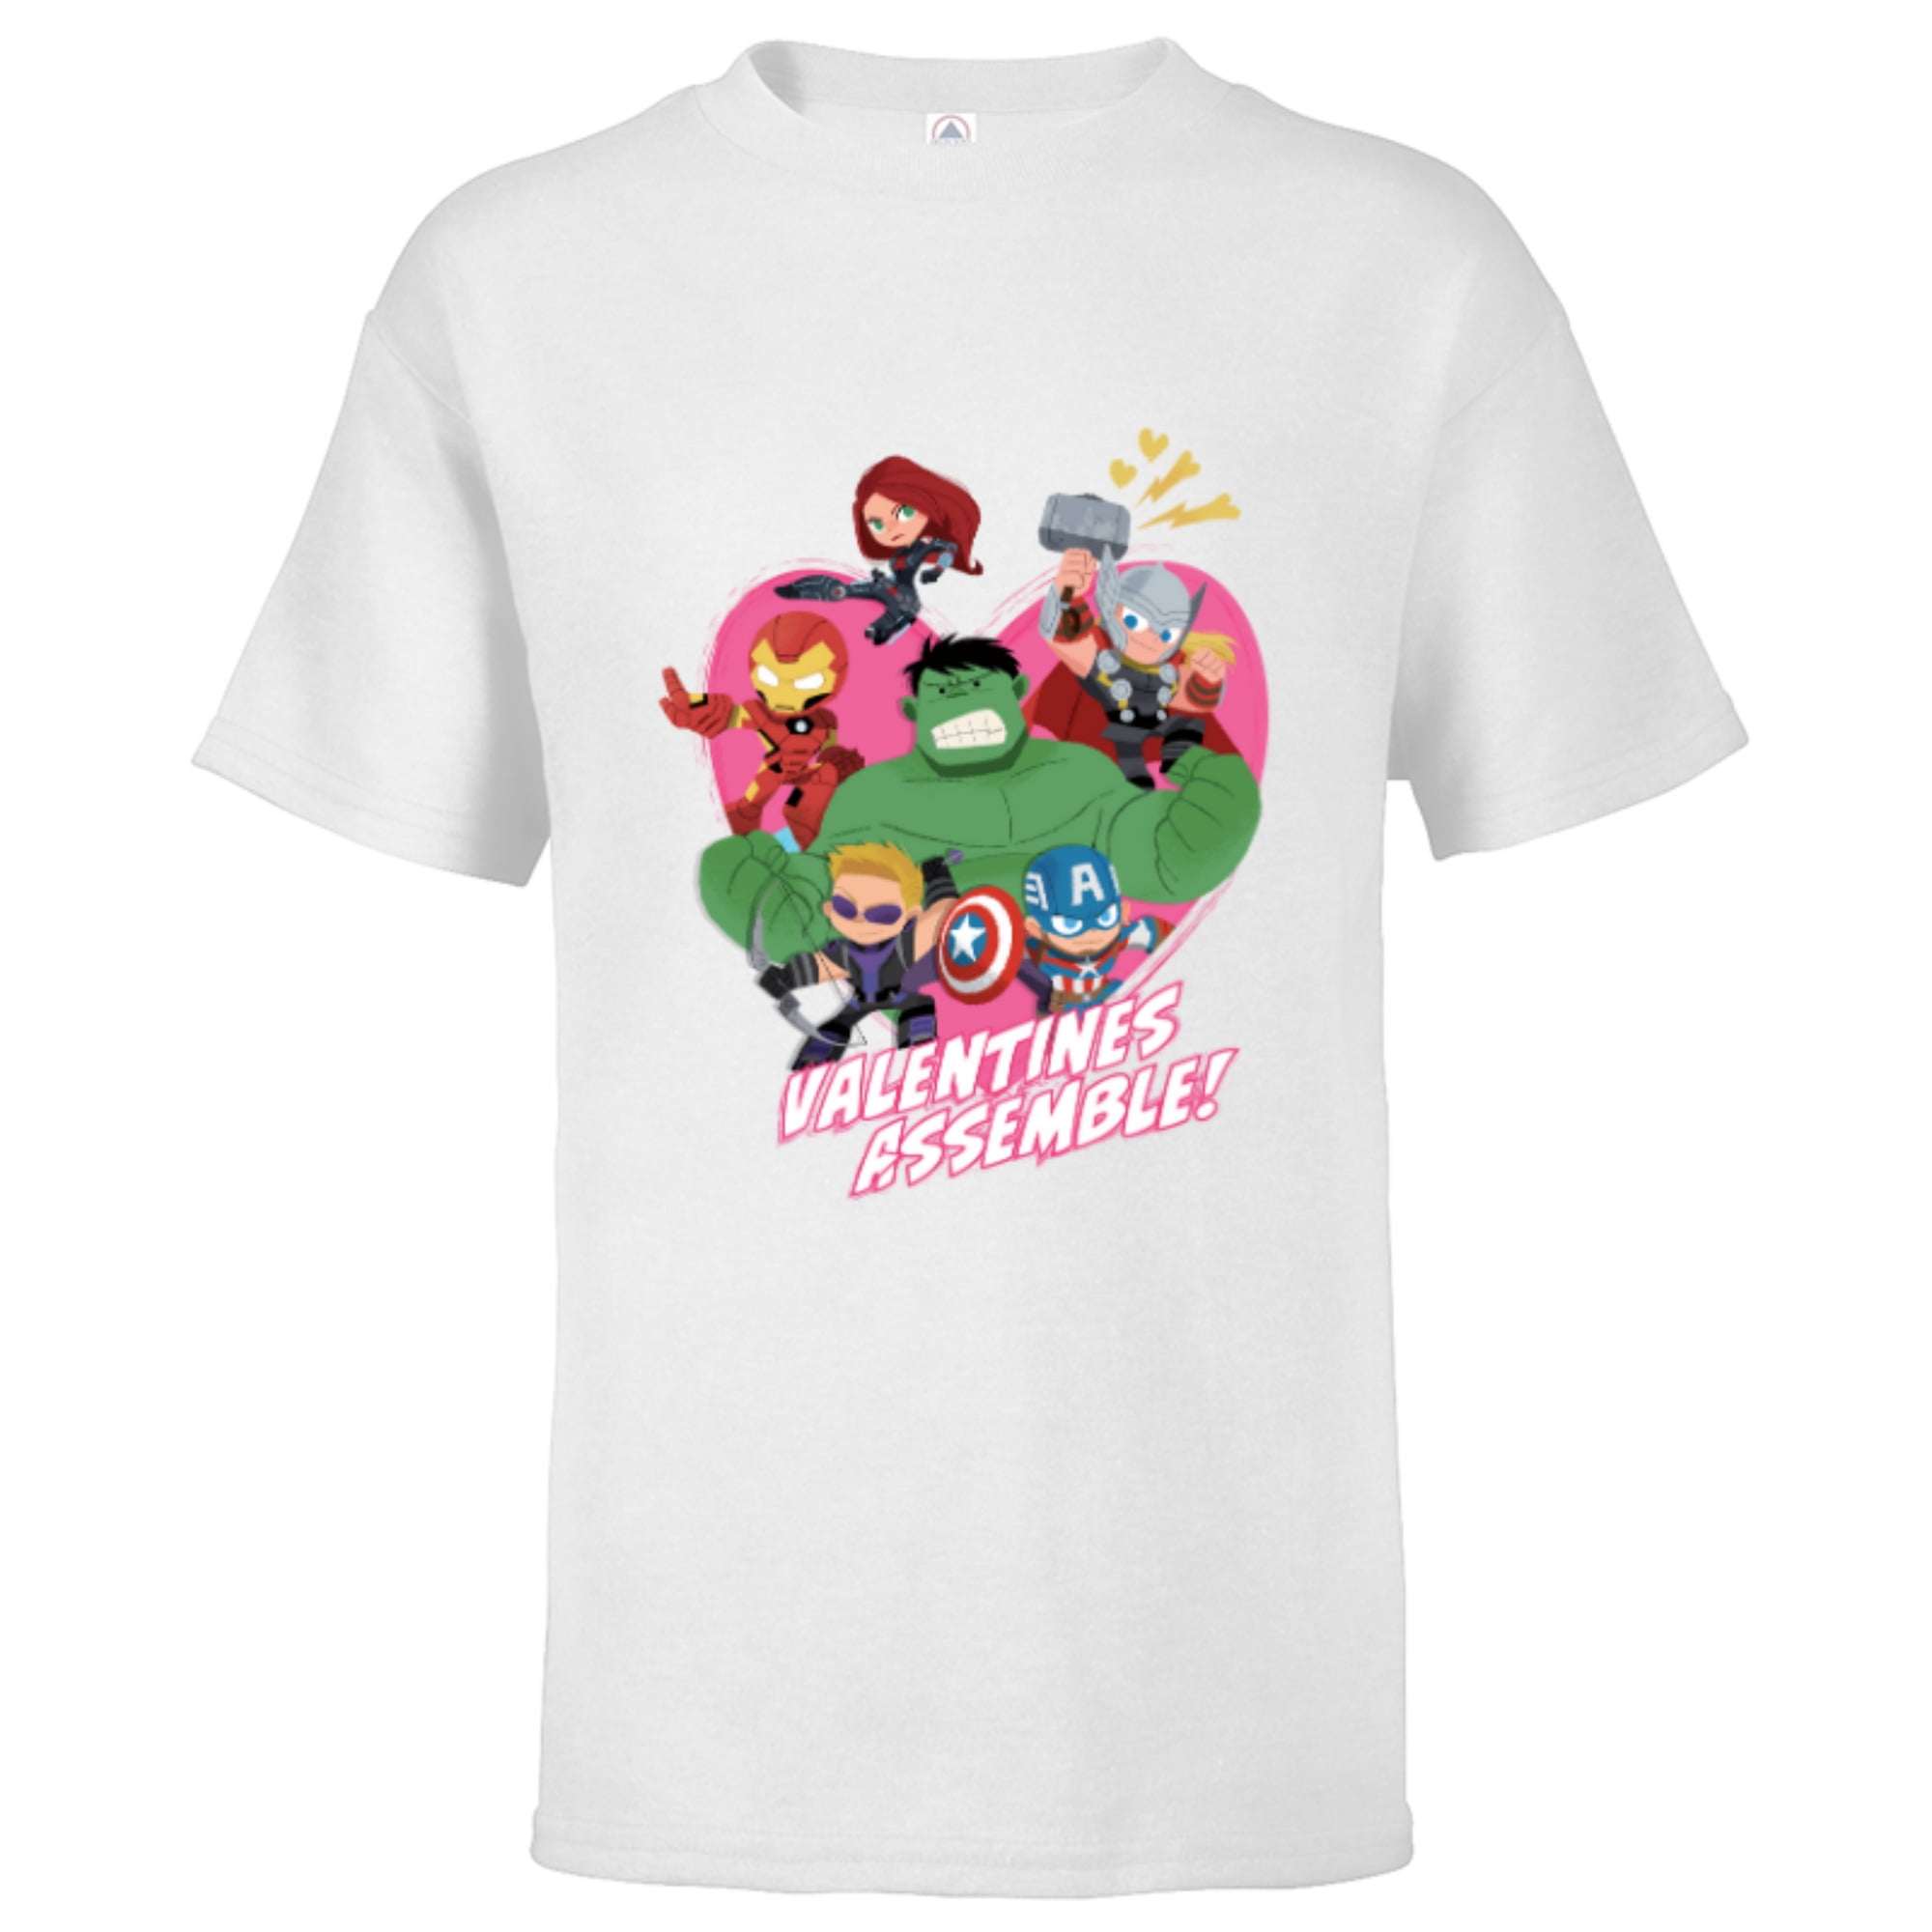 Marvel Avengers Valentine's Assemble - Short Sleeve T-Shirt for Kids -  Customized-Soft Pink